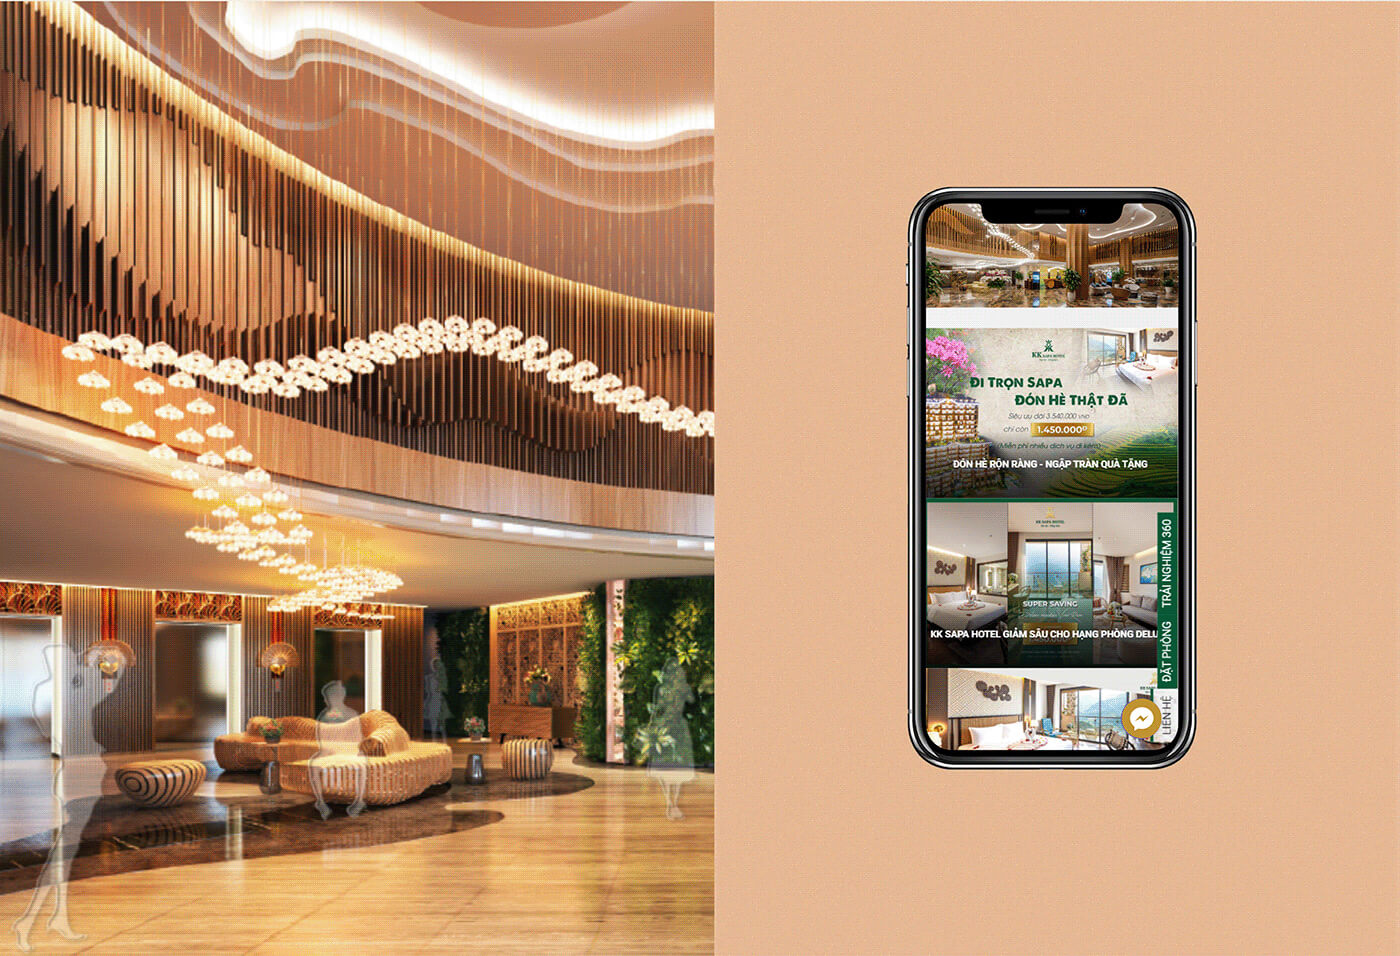 Dự án thiết kế Website KK Sapa Hotel - 09